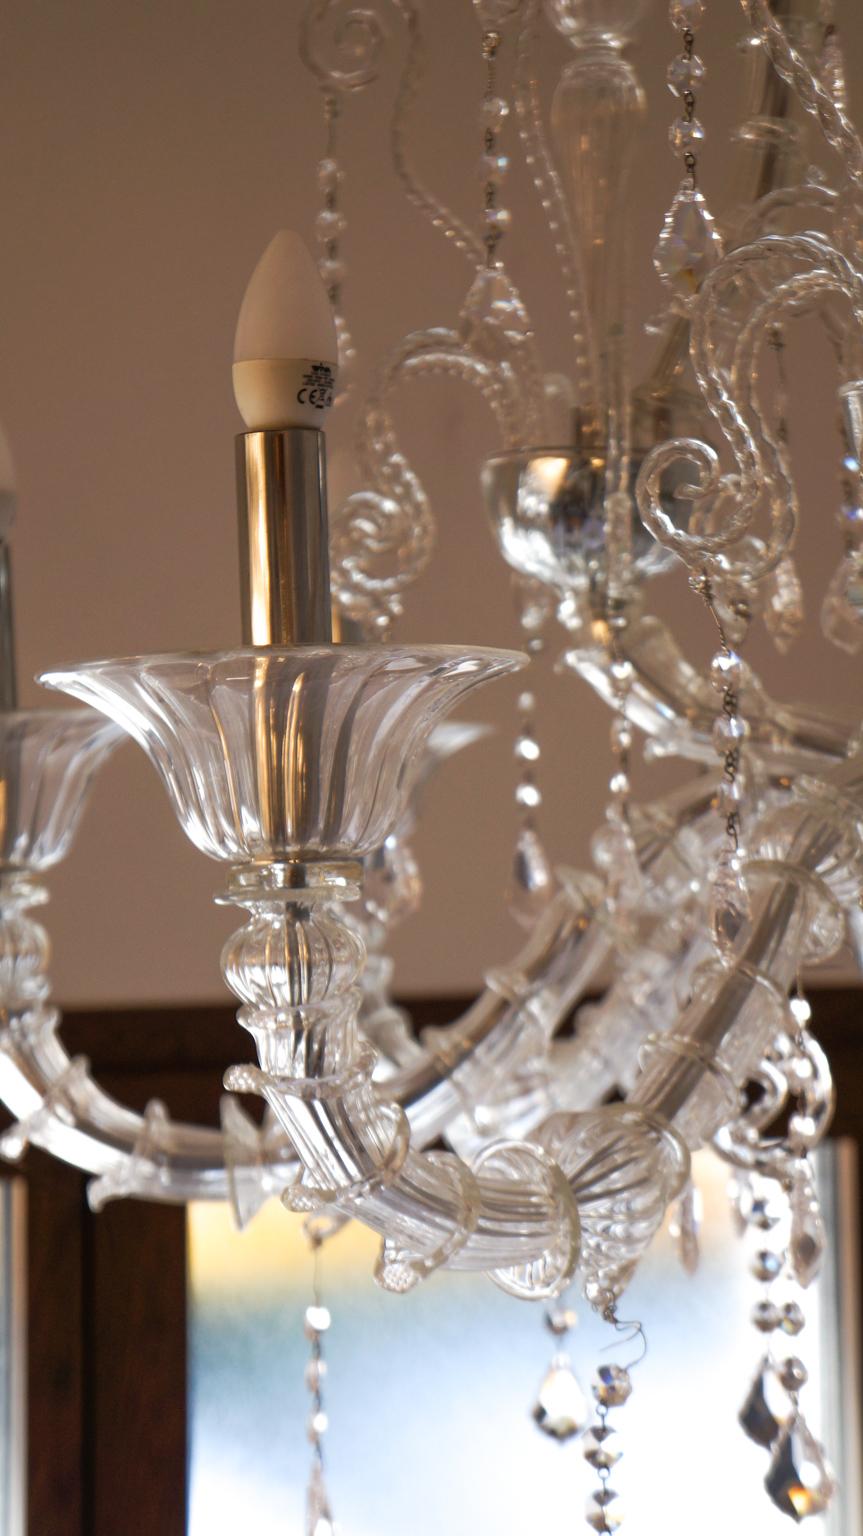 Toso Mid-Century Modern Crystal Ca' Rezzonico Murano Glass Chandelier, 1989 For Sale 3